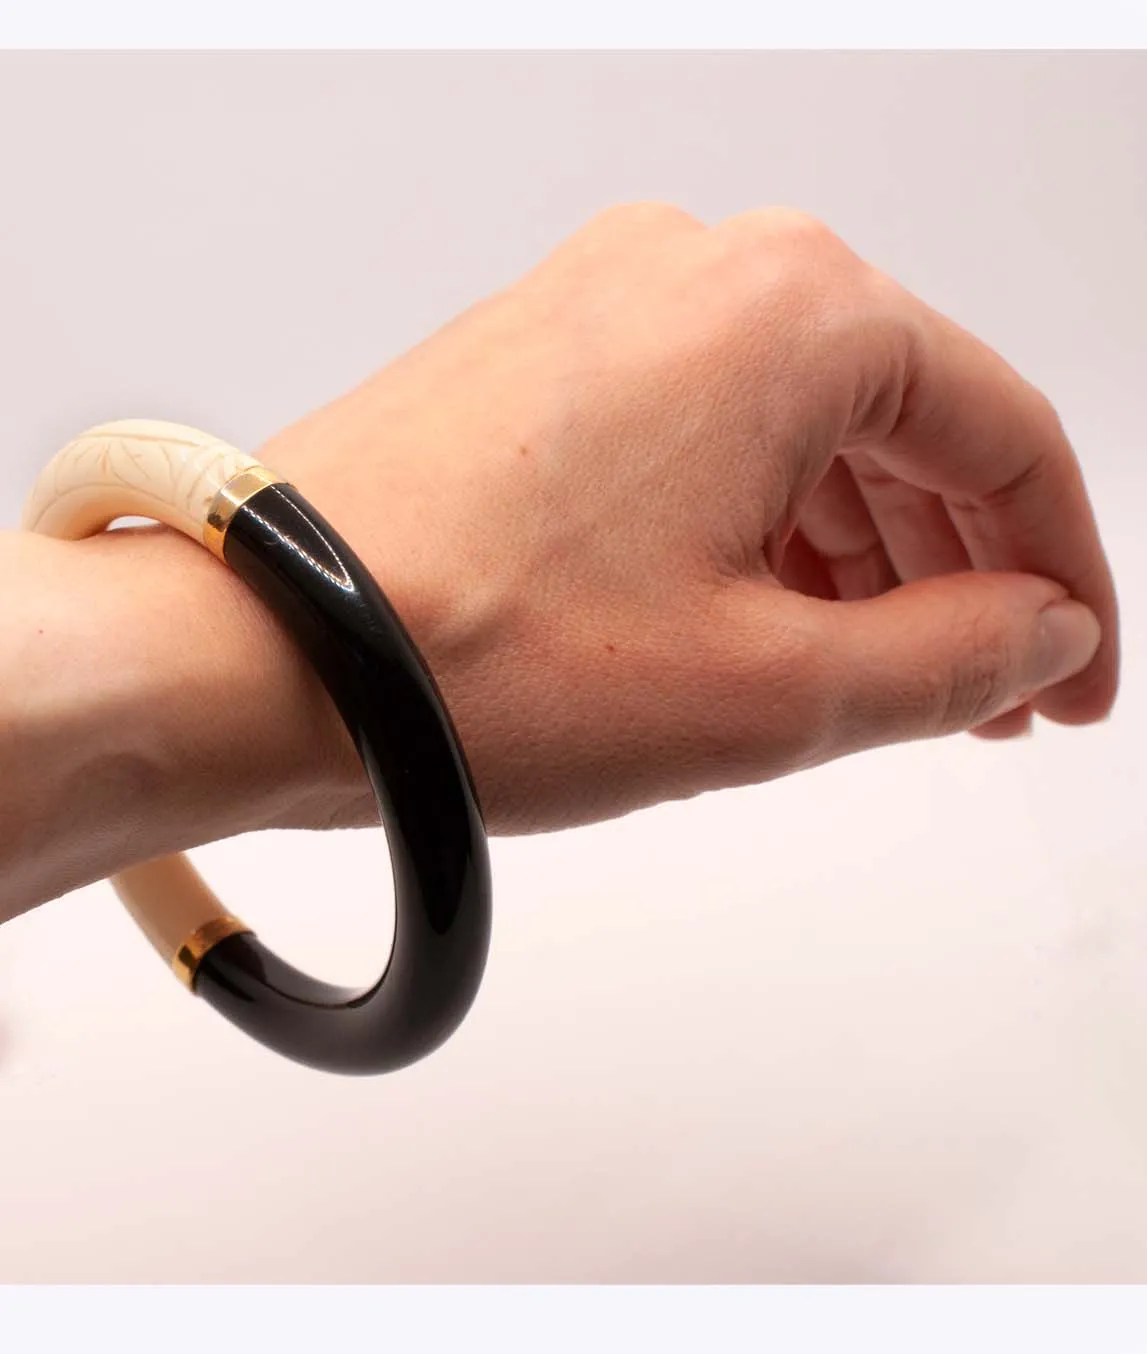 Givenchy black and ivory plastic bangle bracelet on a wrist